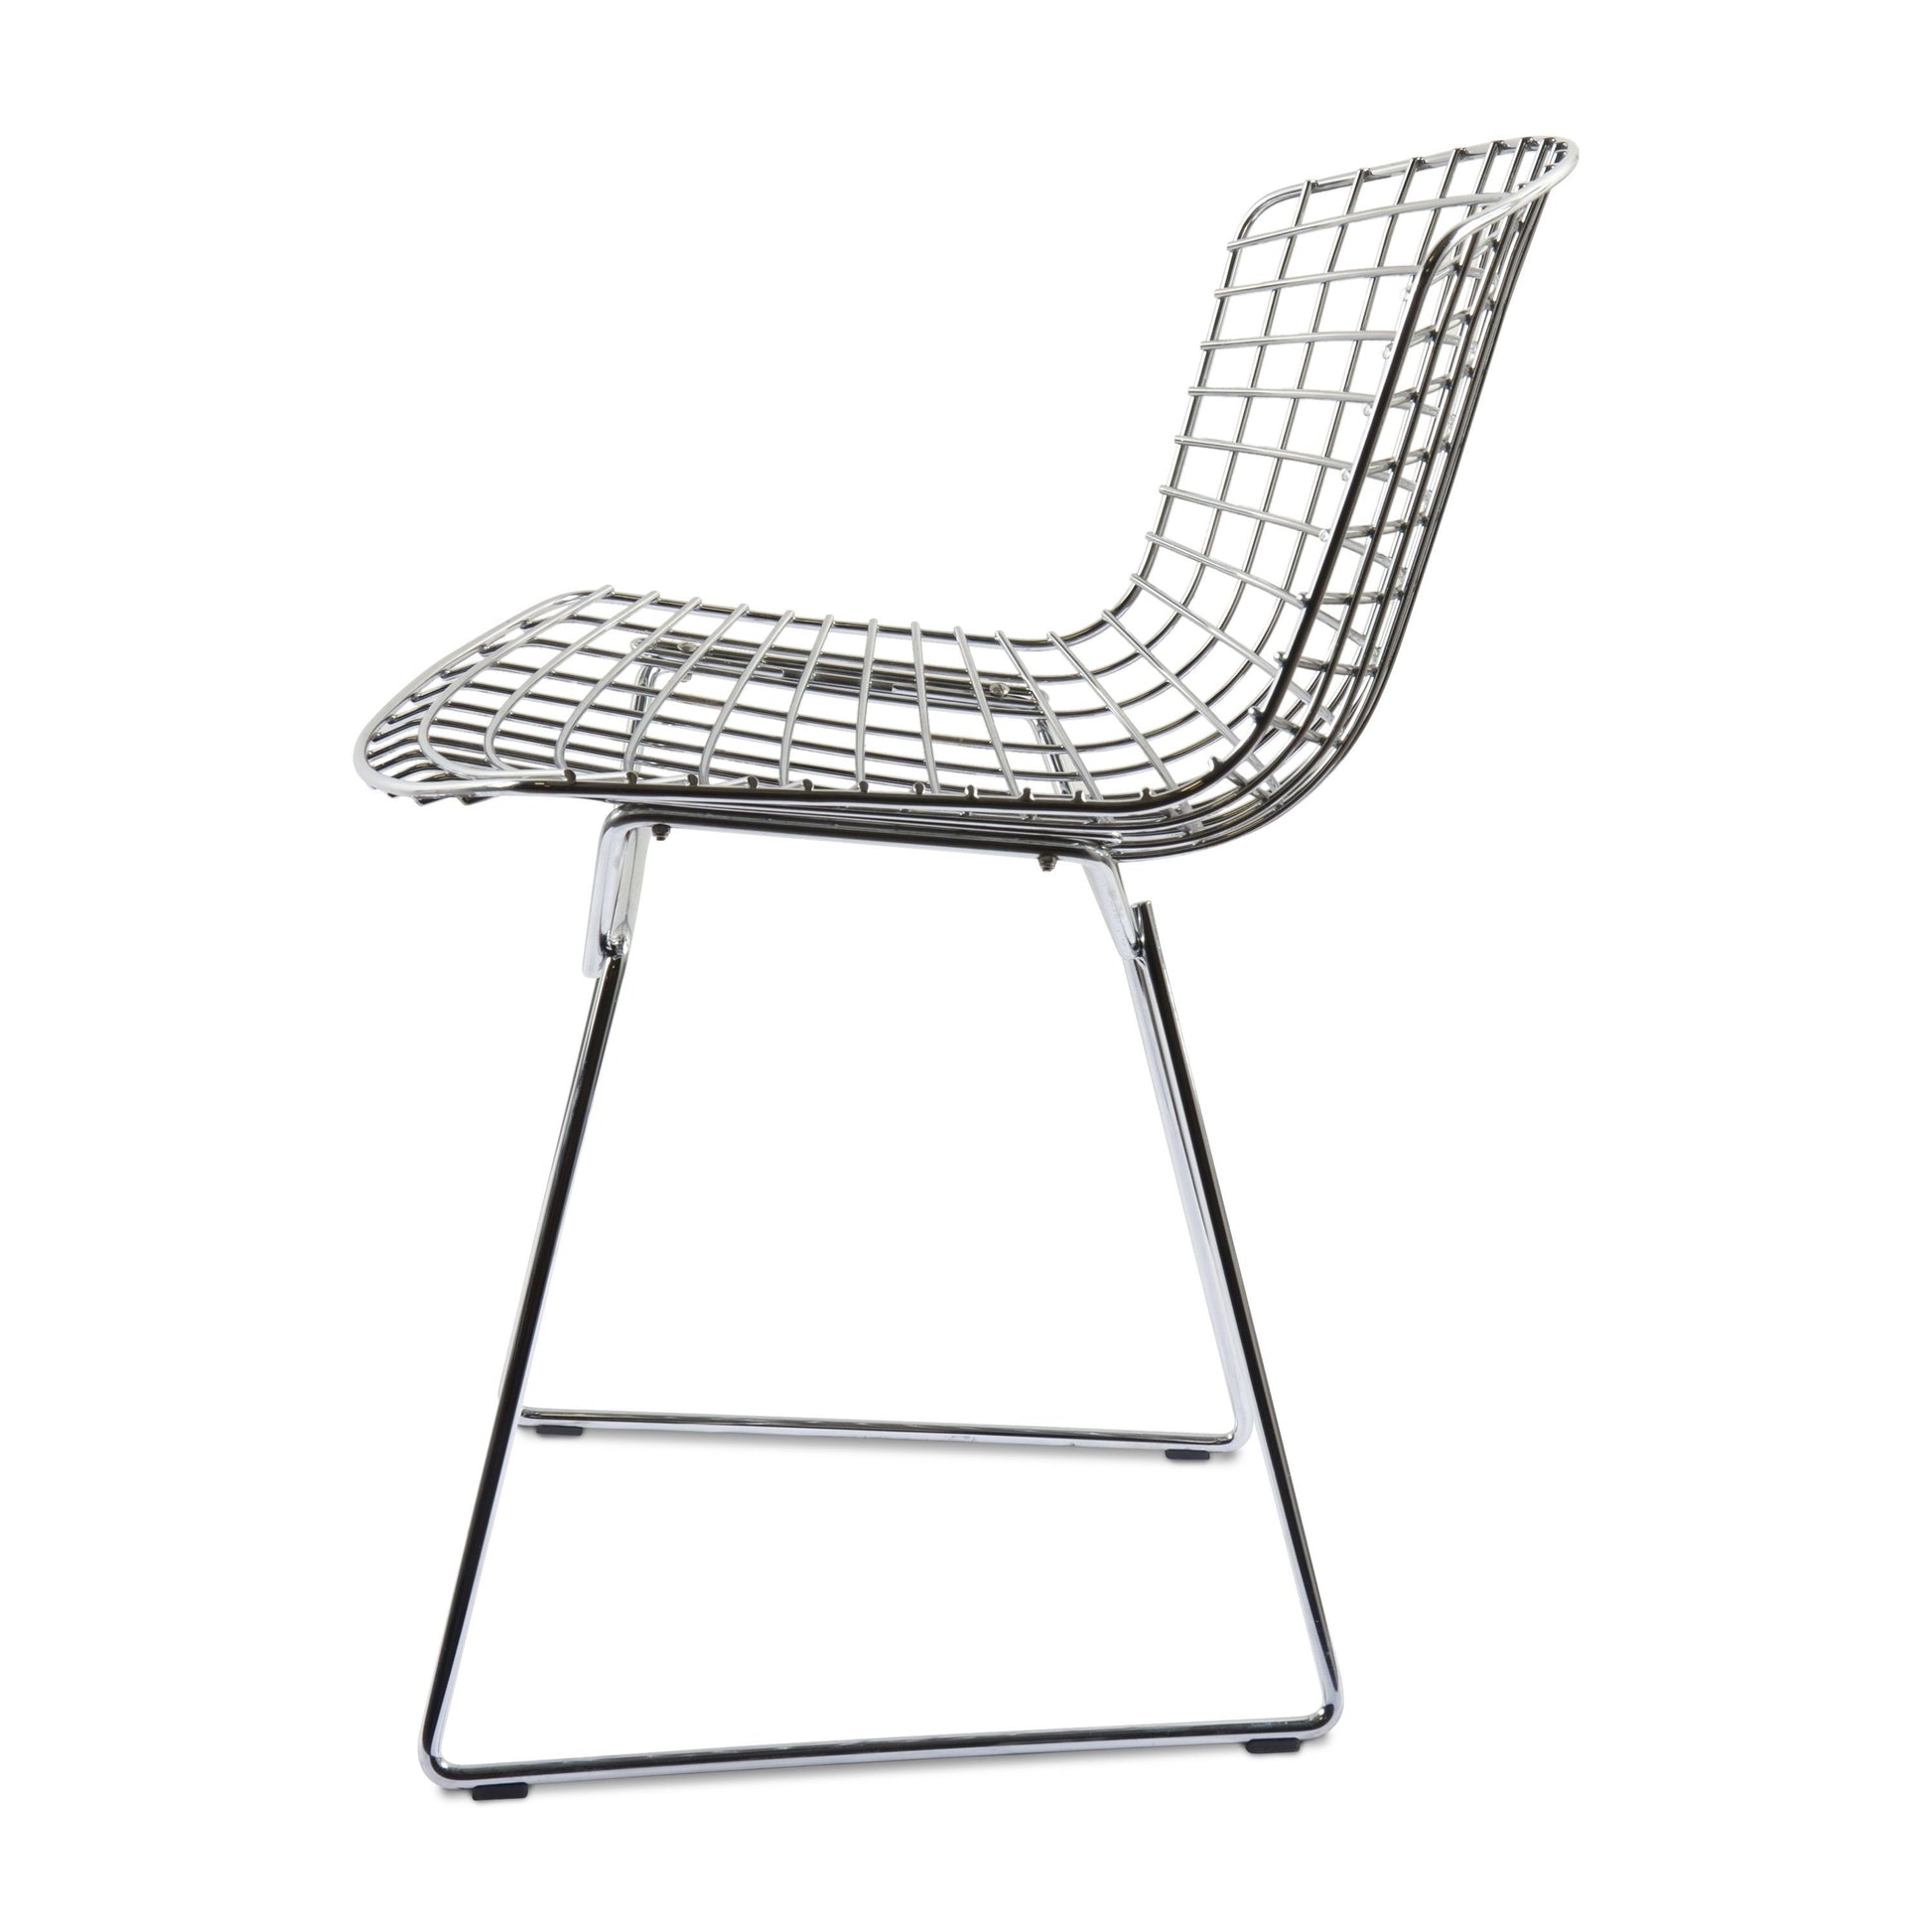 Bertioa Side Chair (Renewed) - chairorama